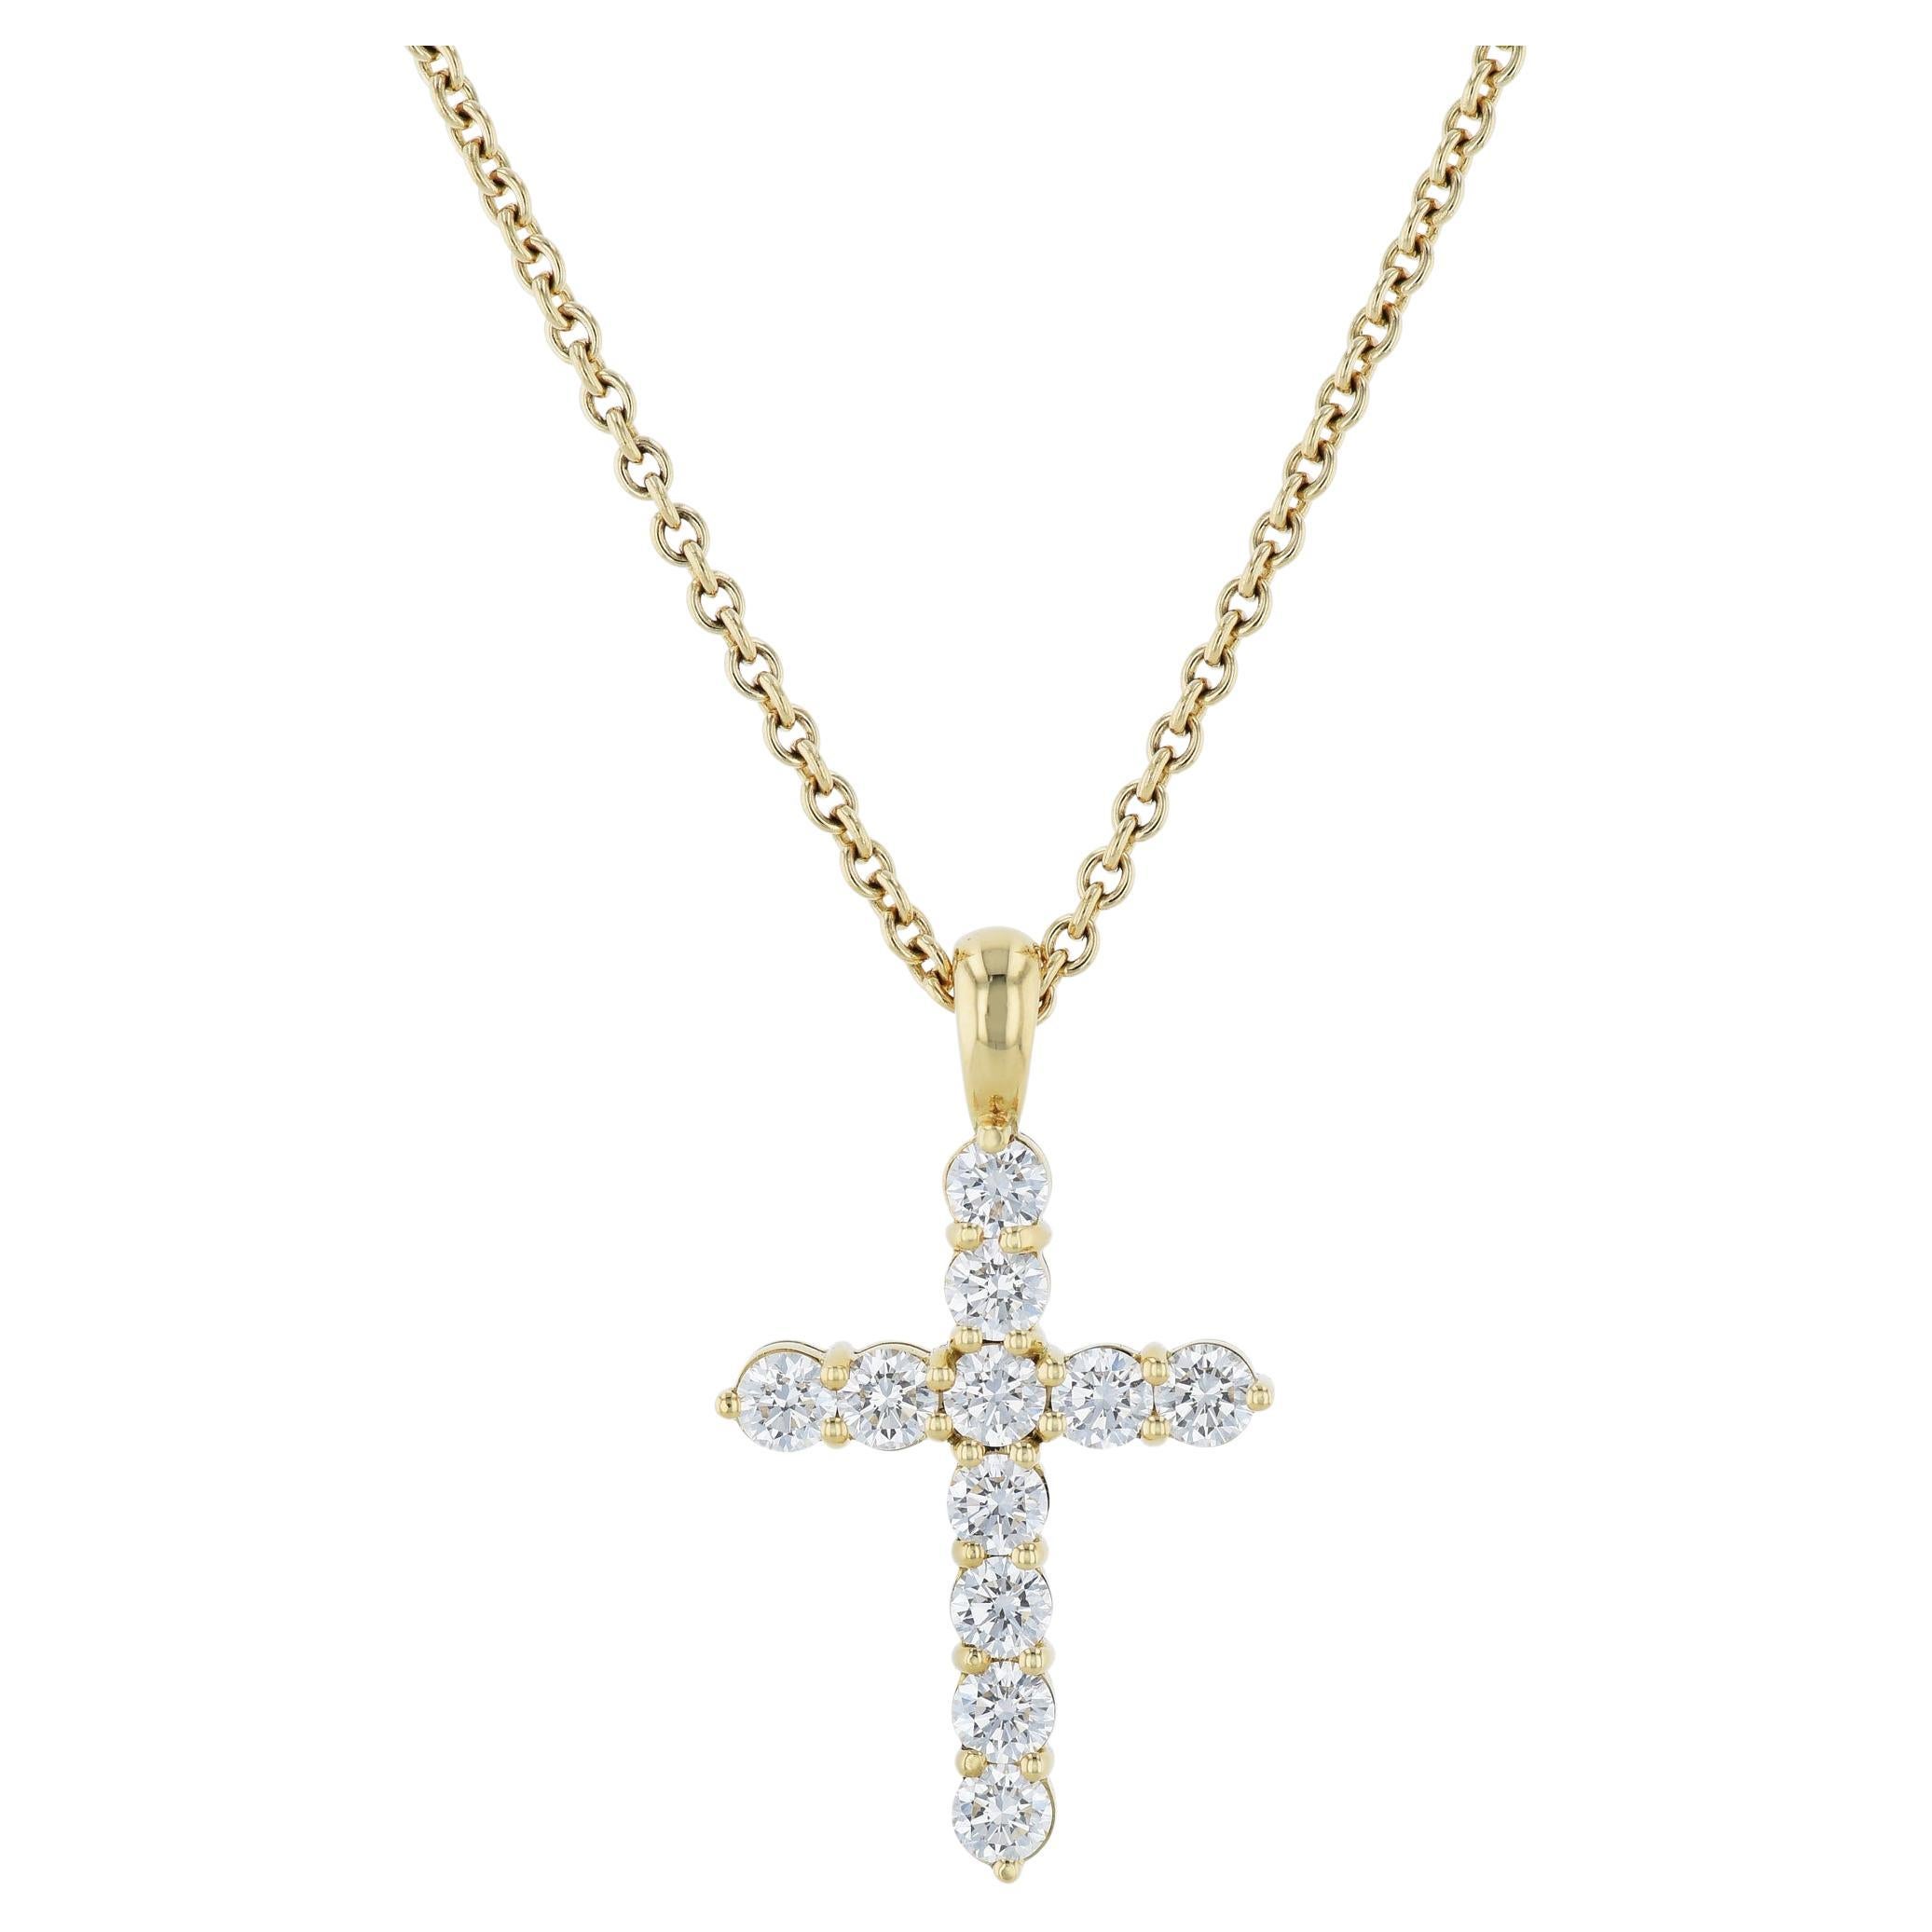 Handmade 1.68 Carat Diamond Cross Pendant Yellow Gold Necklace